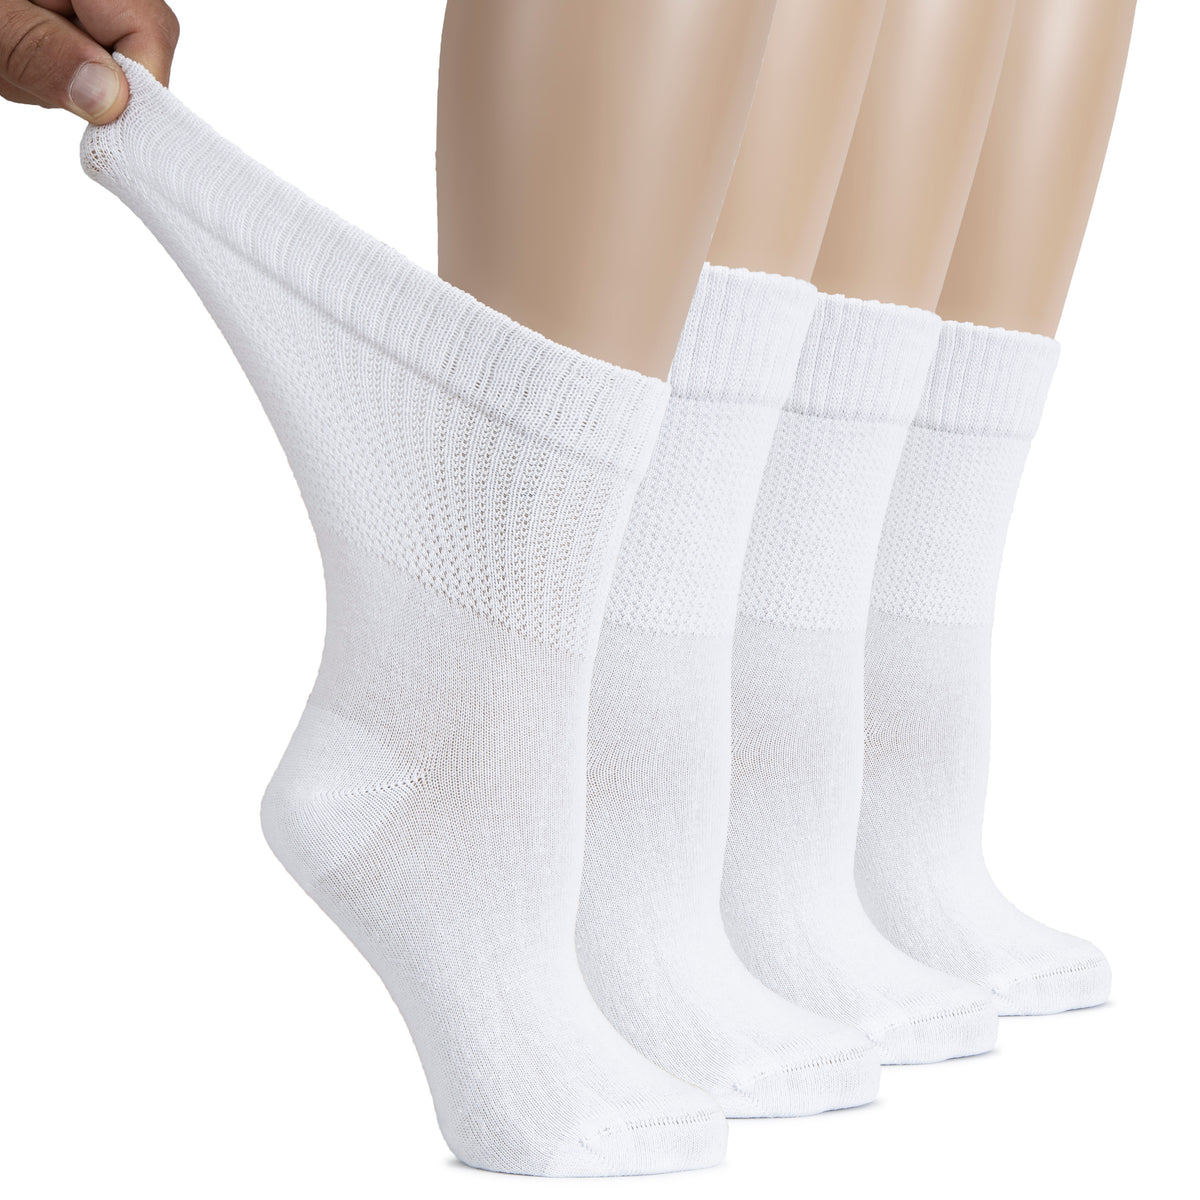 Hugh Ugoli Cotton Diabetic Women's Socks, Crew, Loose, Wide Stretchy, Thin, Seamless Toe and Non-Binding Top, 4 Pairs | Shoe Size: 9-12 | Indigo Blue